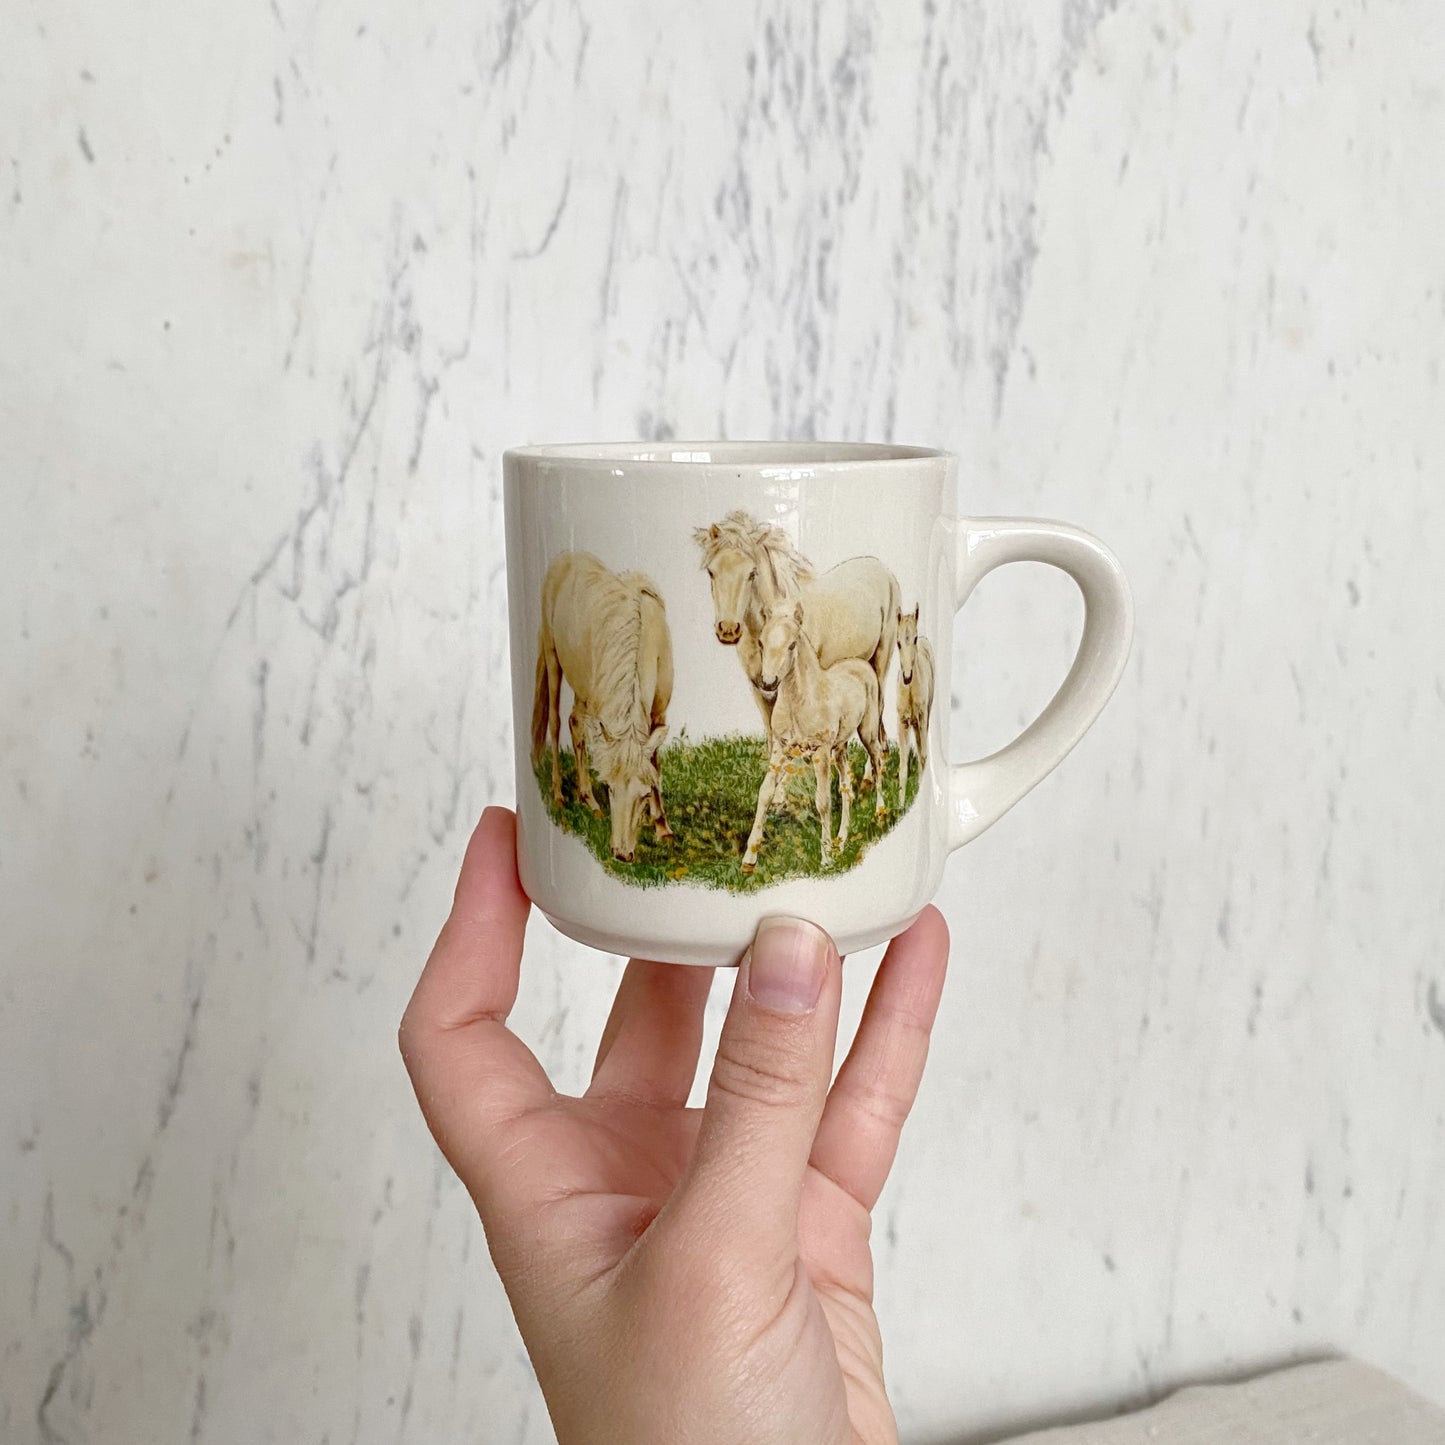 Vintage Ceramic Mug with Horses